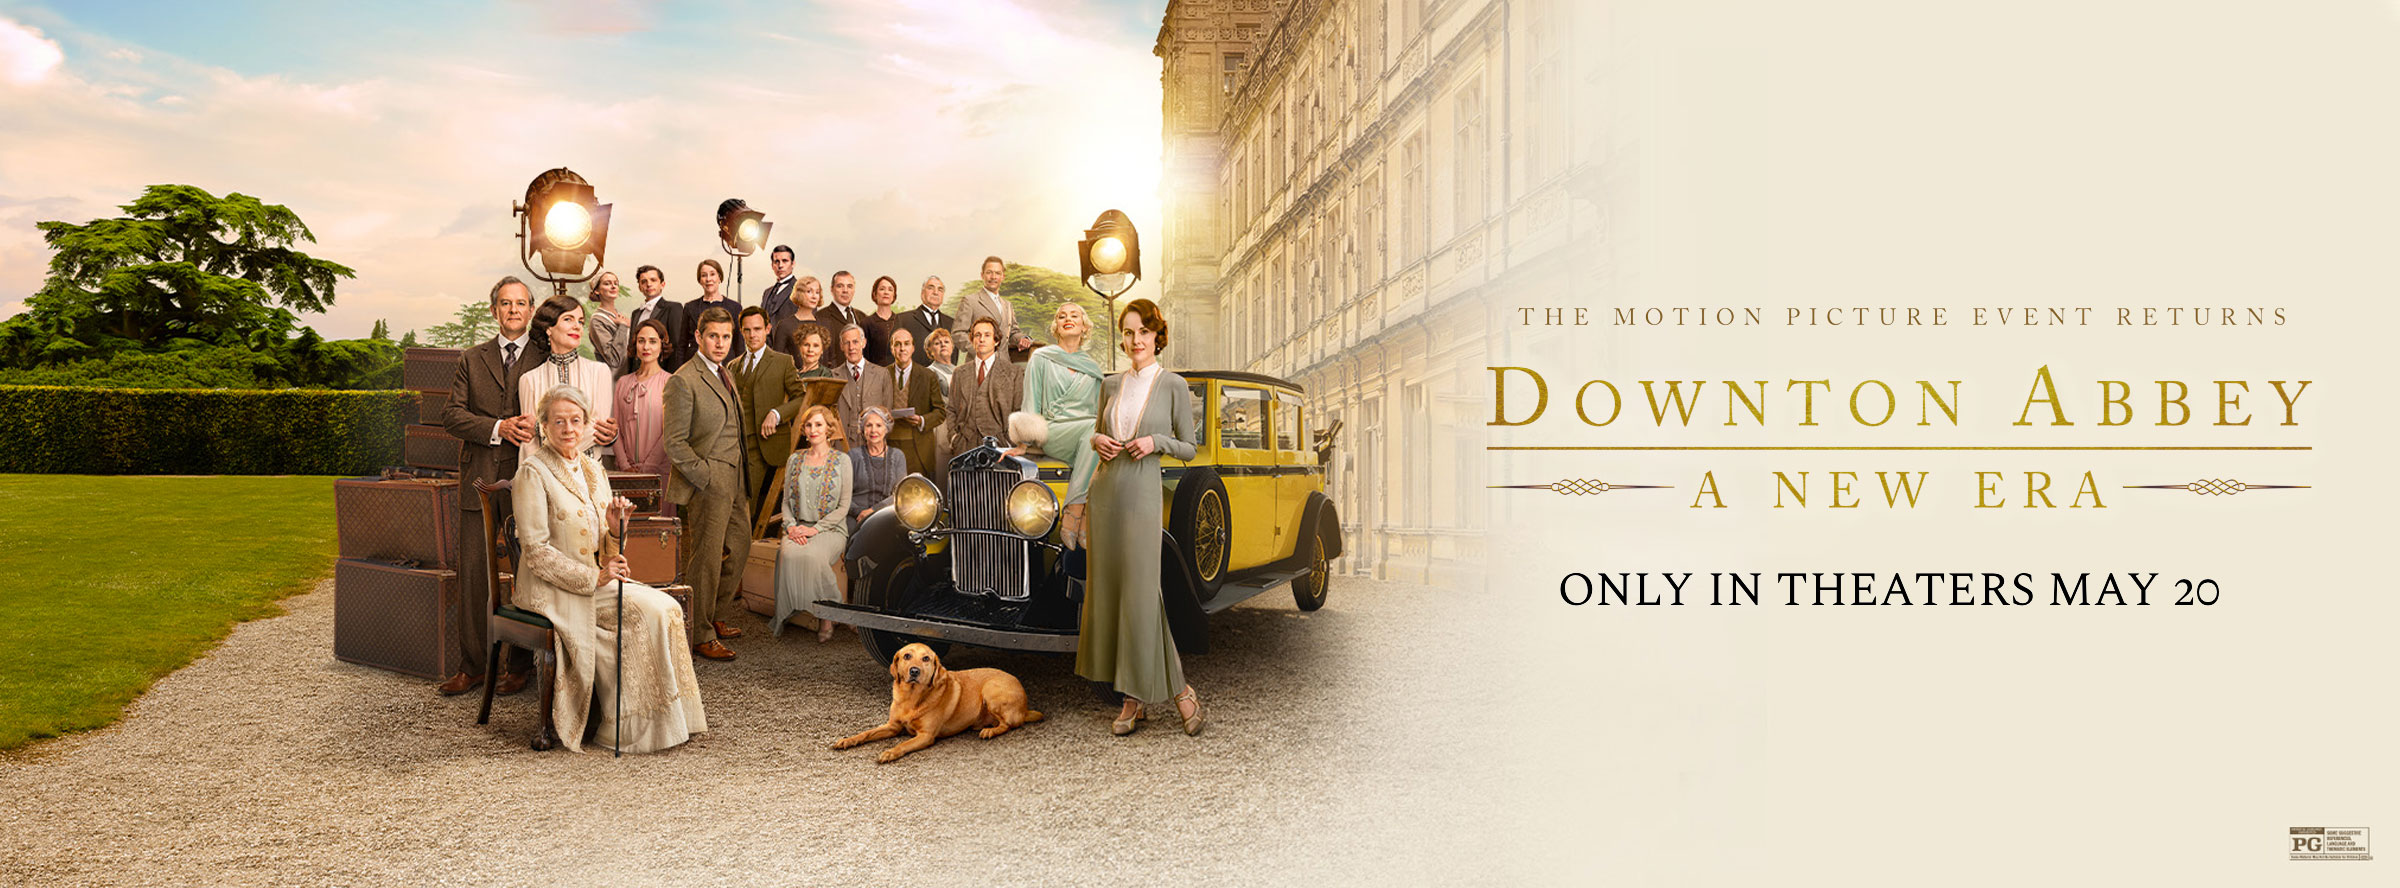 Slider Image for Downton Abbey: A New Era